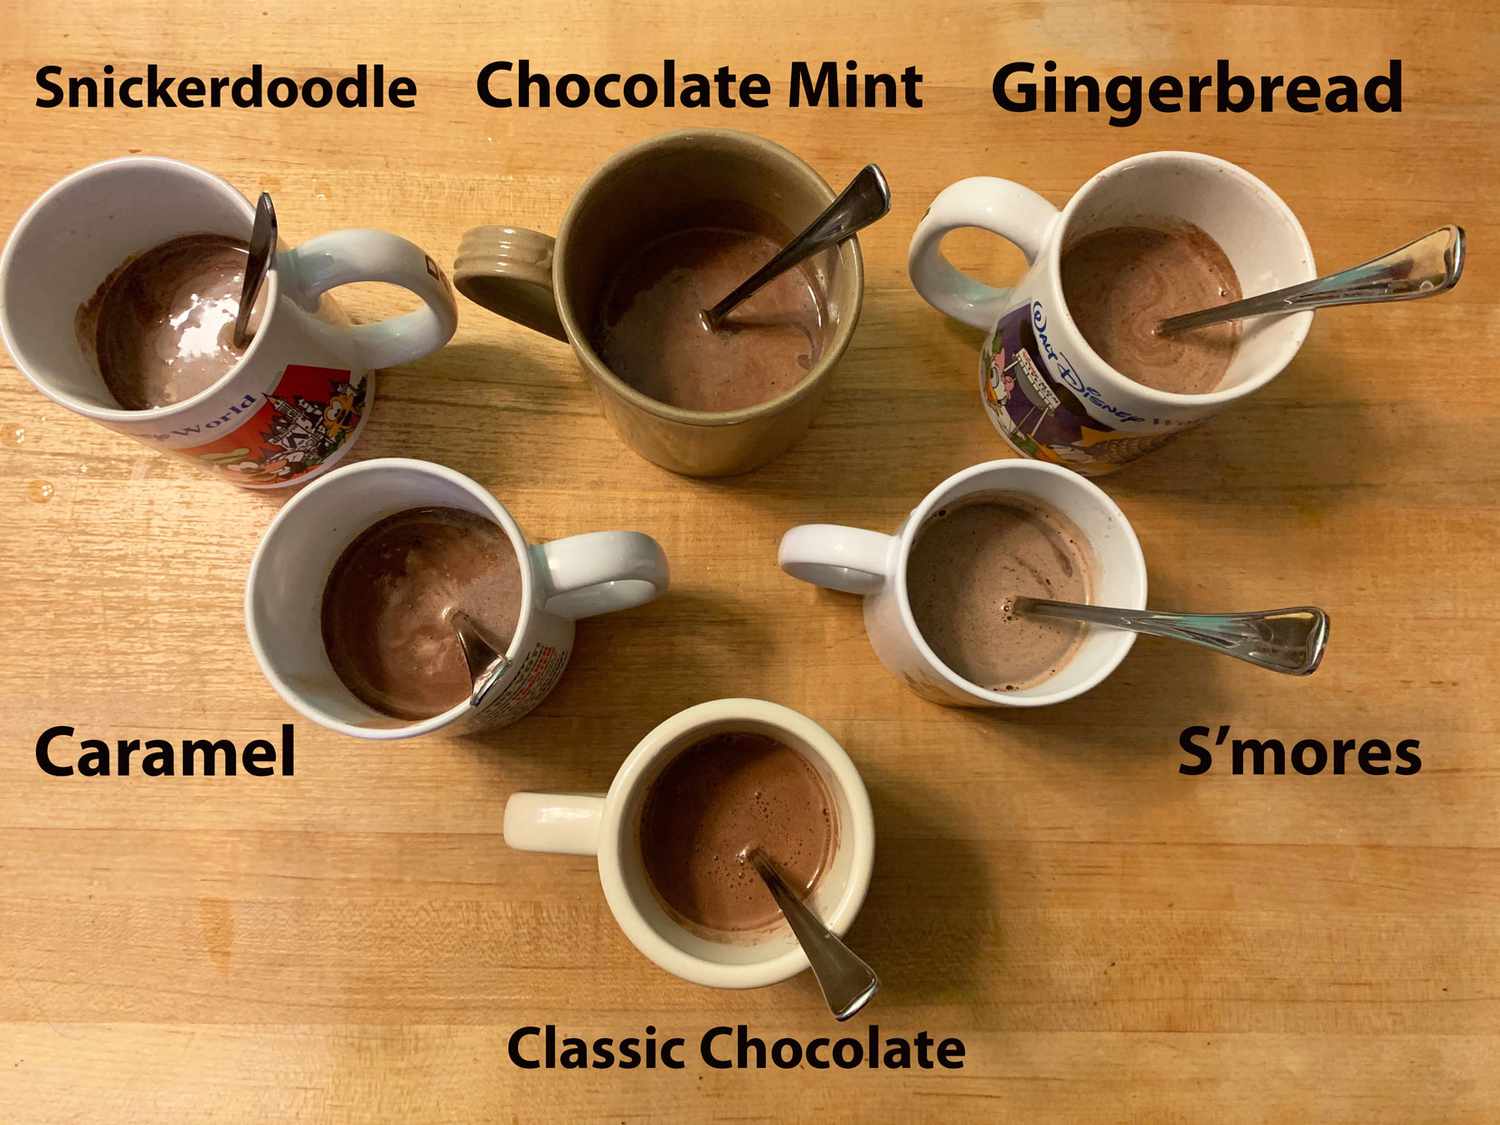 Hot chocolate in a mug